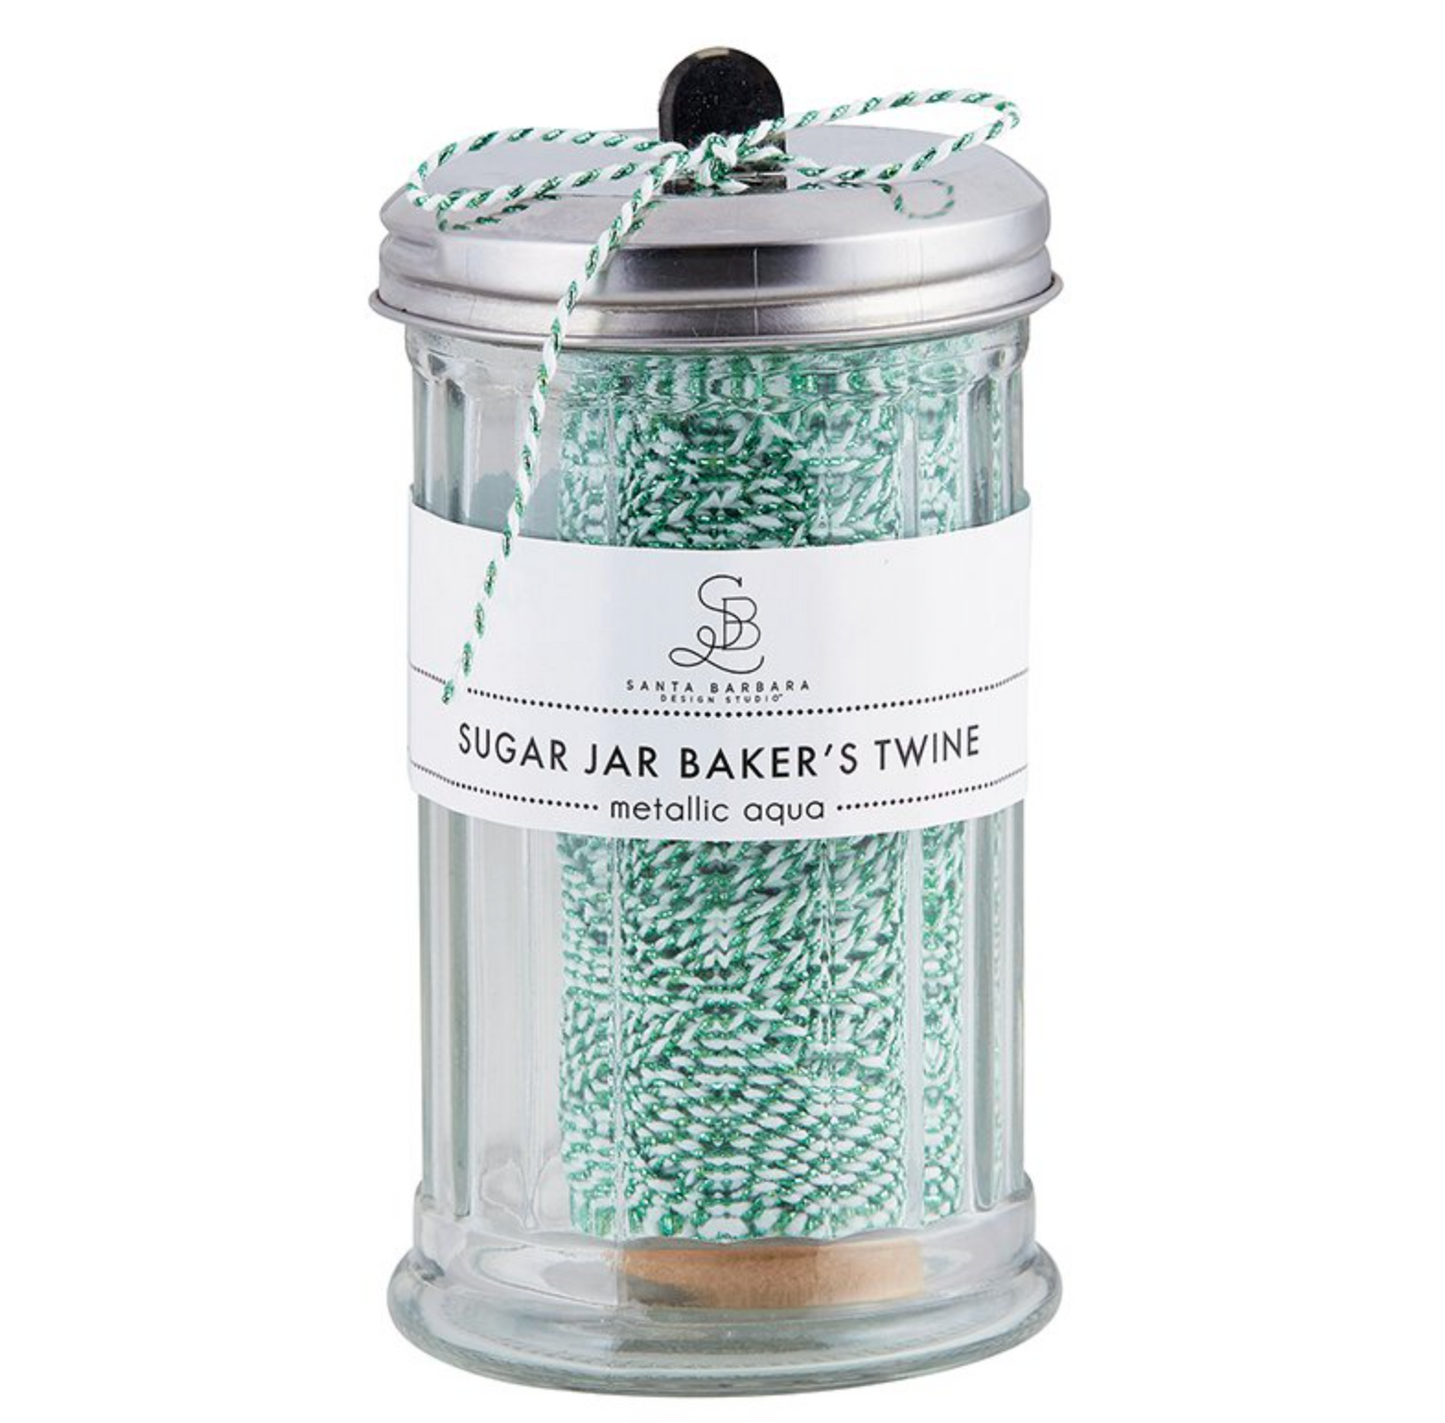 Metallic Aqua Sugar Jar Baker's Twine